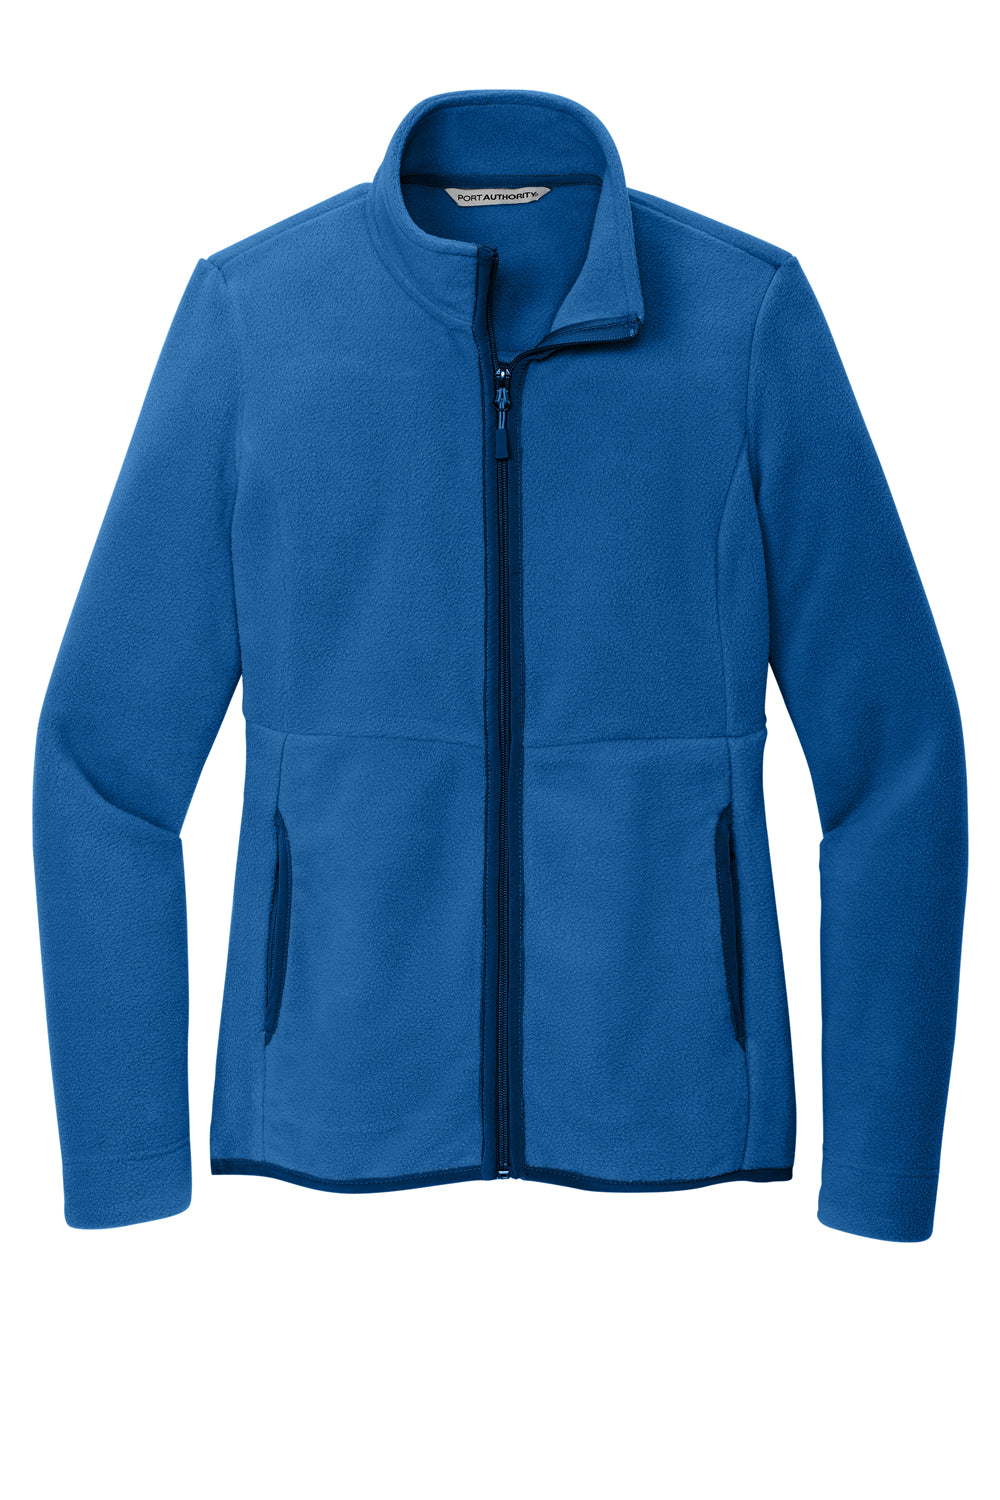 Port Authority L110 Womens Connection Fleece Full Zip Jacket True Blue Flat Front